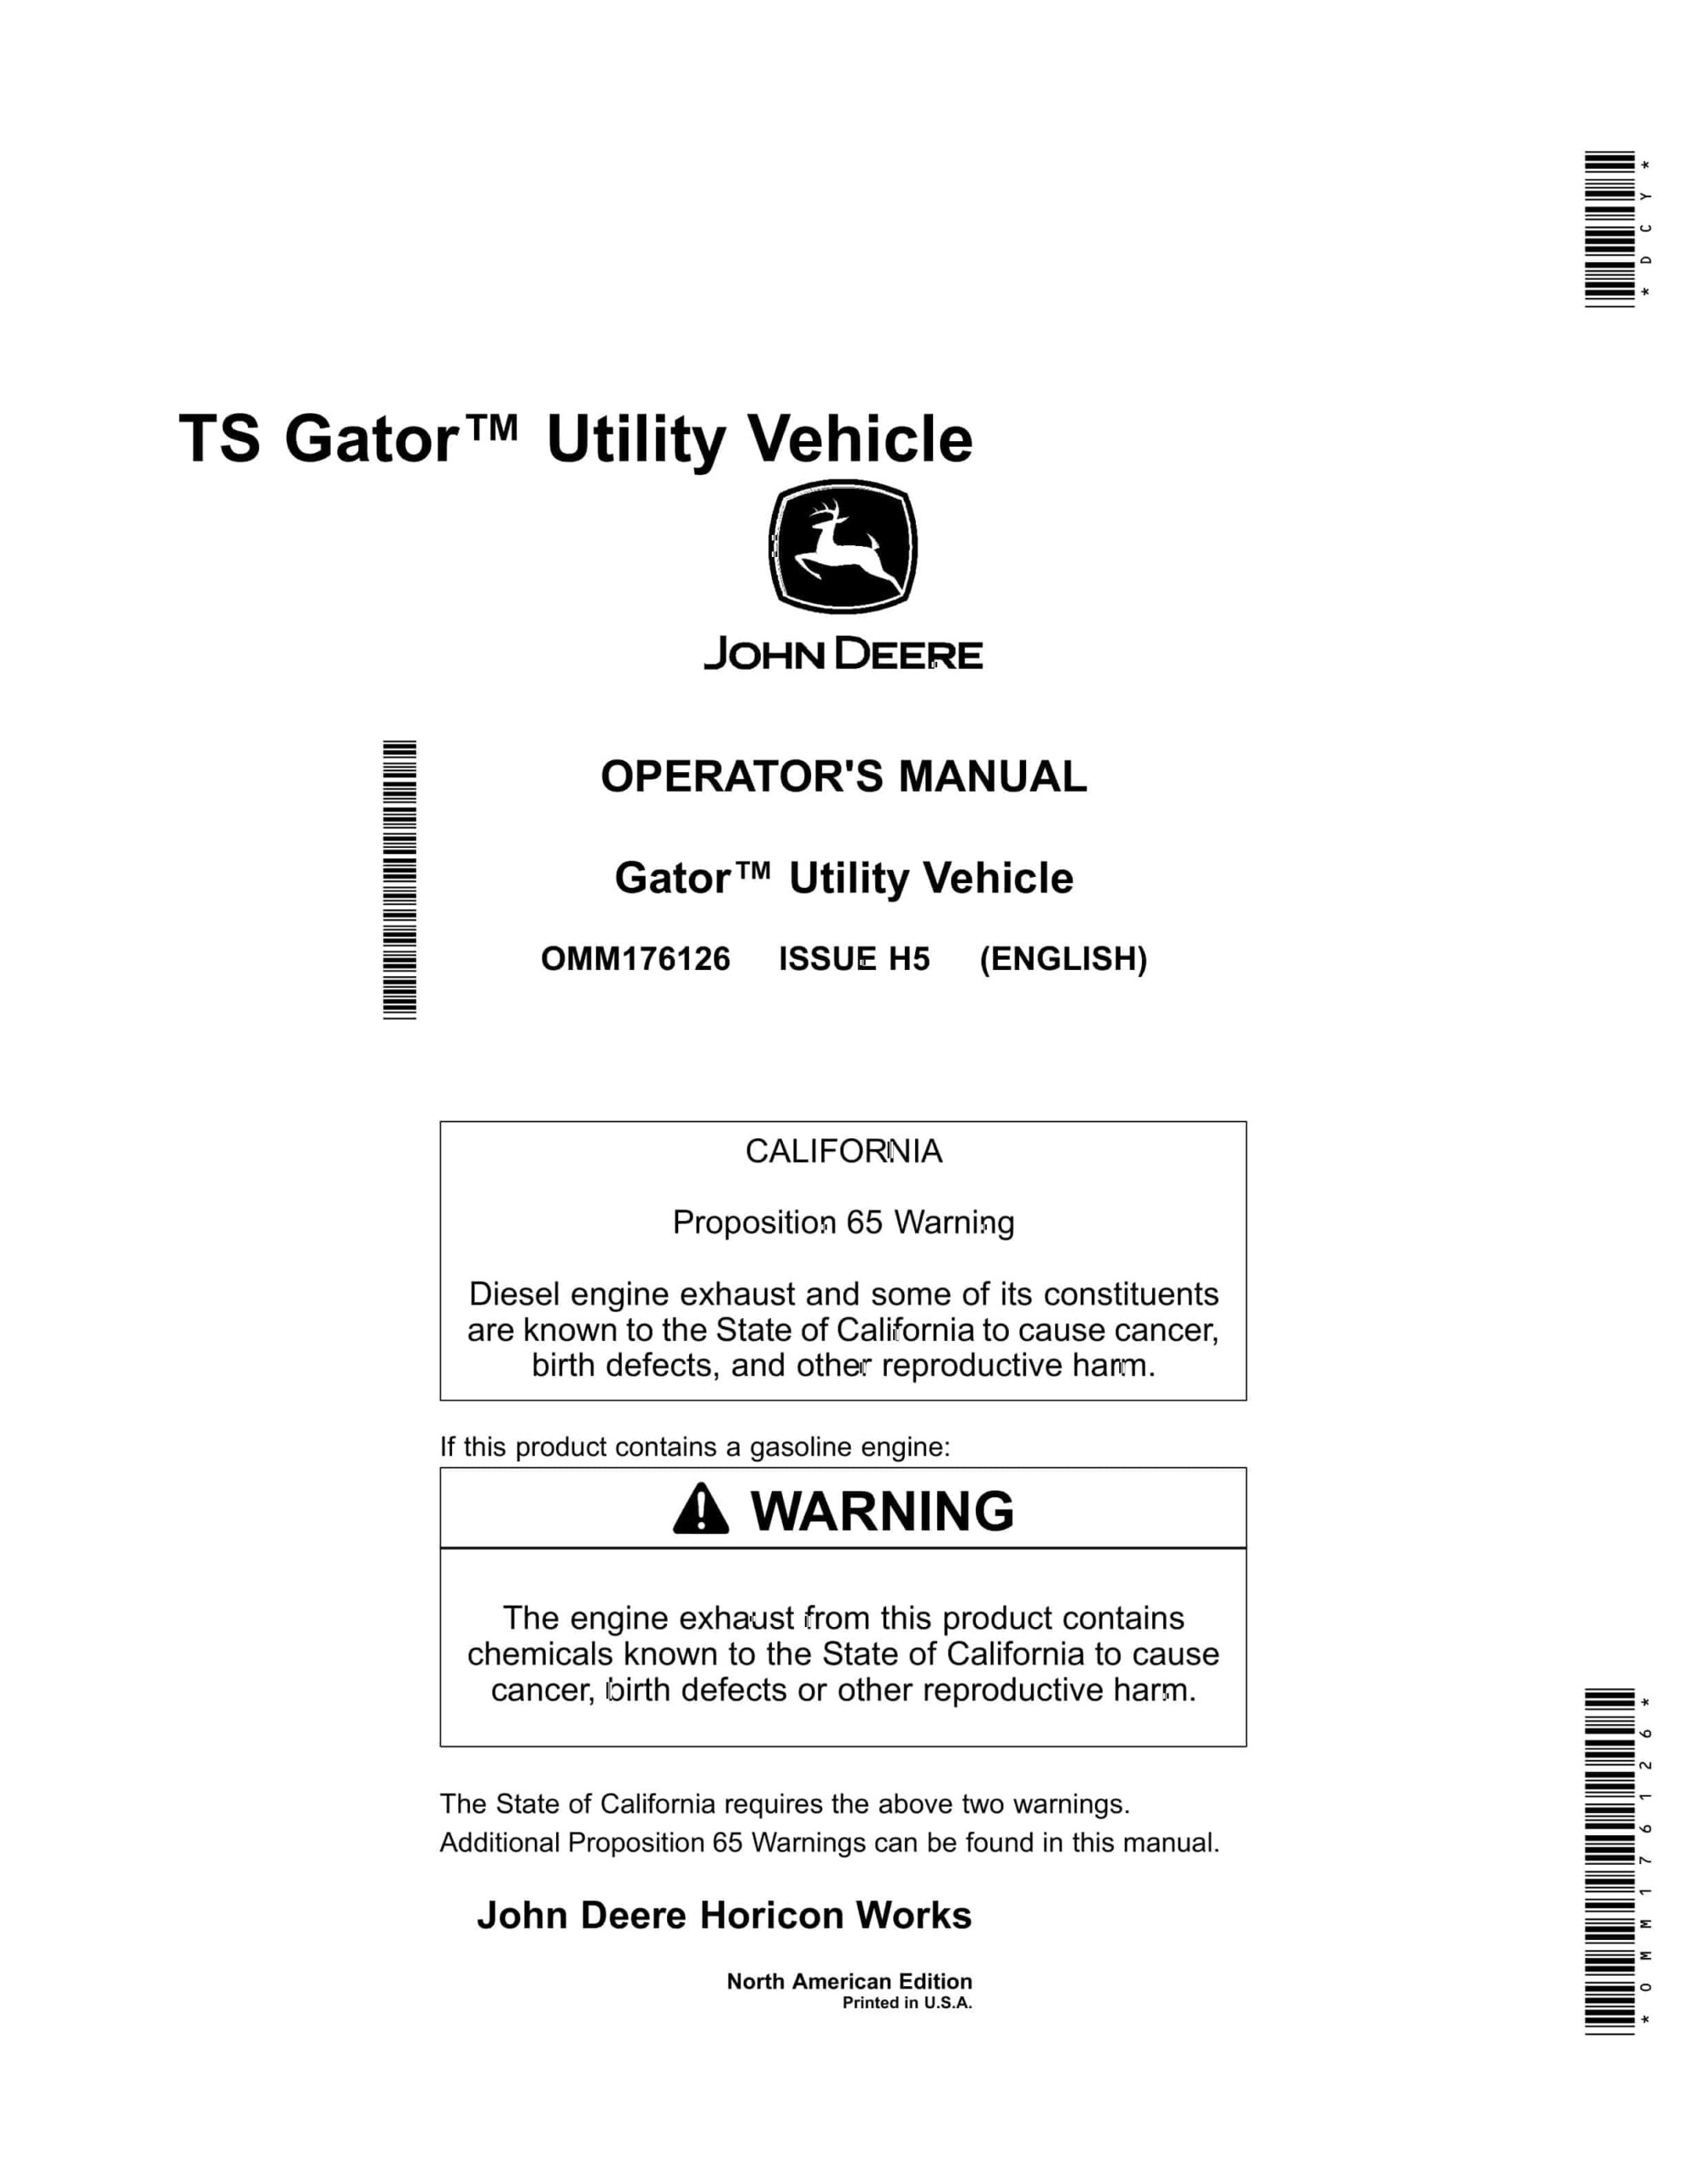 John Deere TS Gator Utility Vehicles Operator Manual OMM176126-1